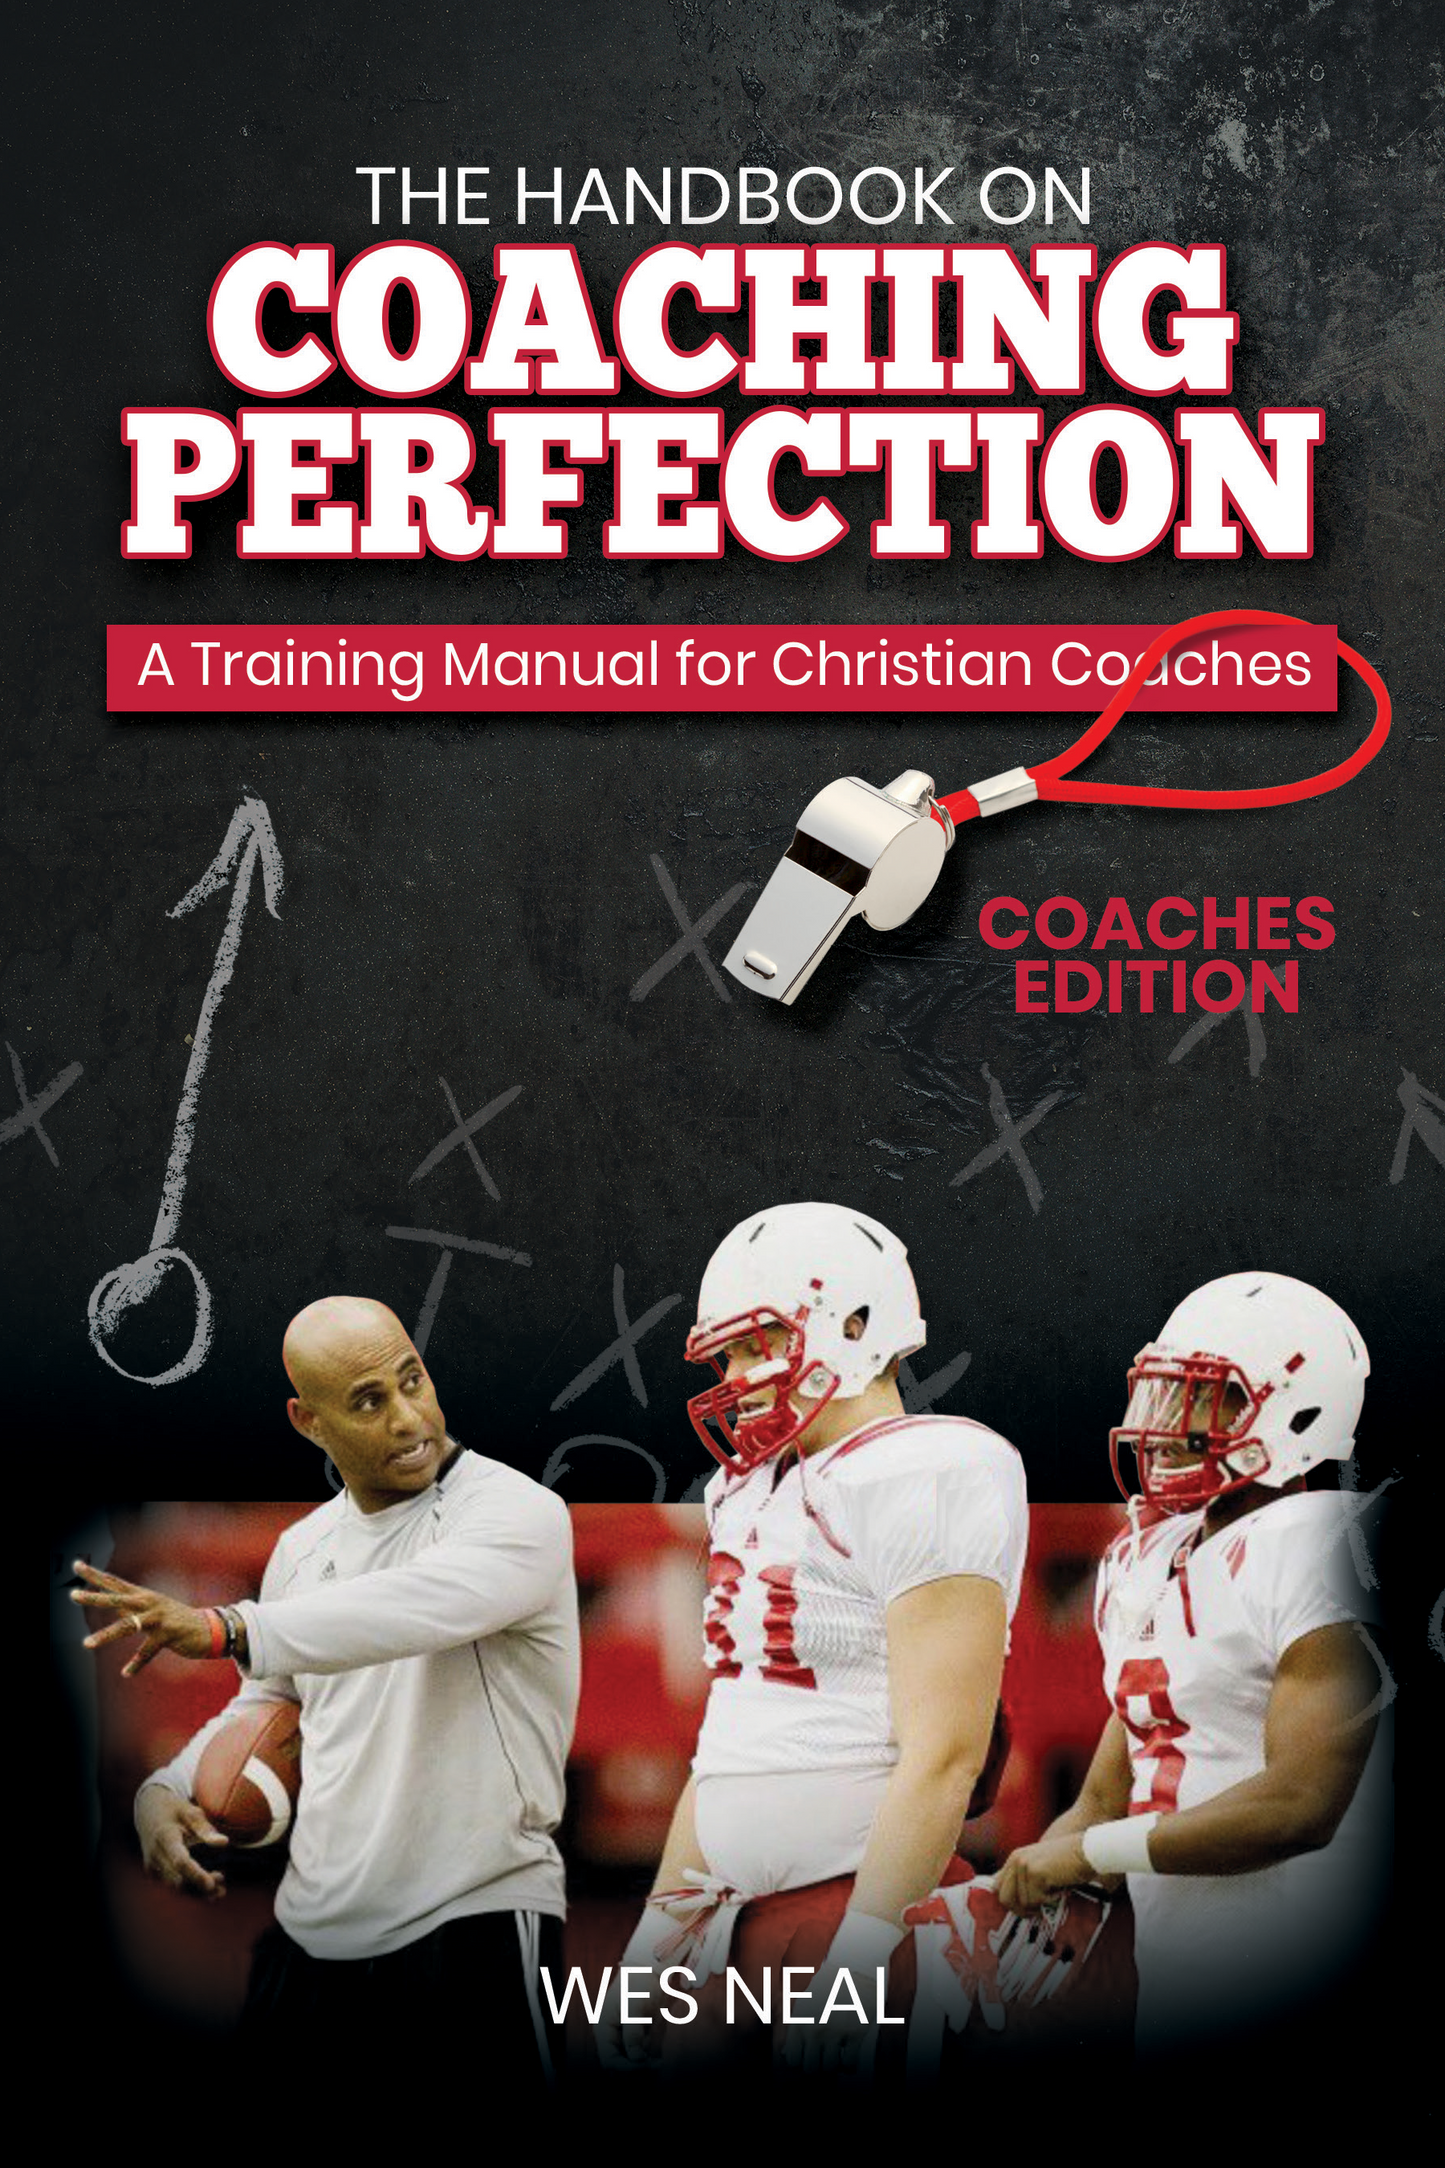 The Handbook on Coaching Perfection